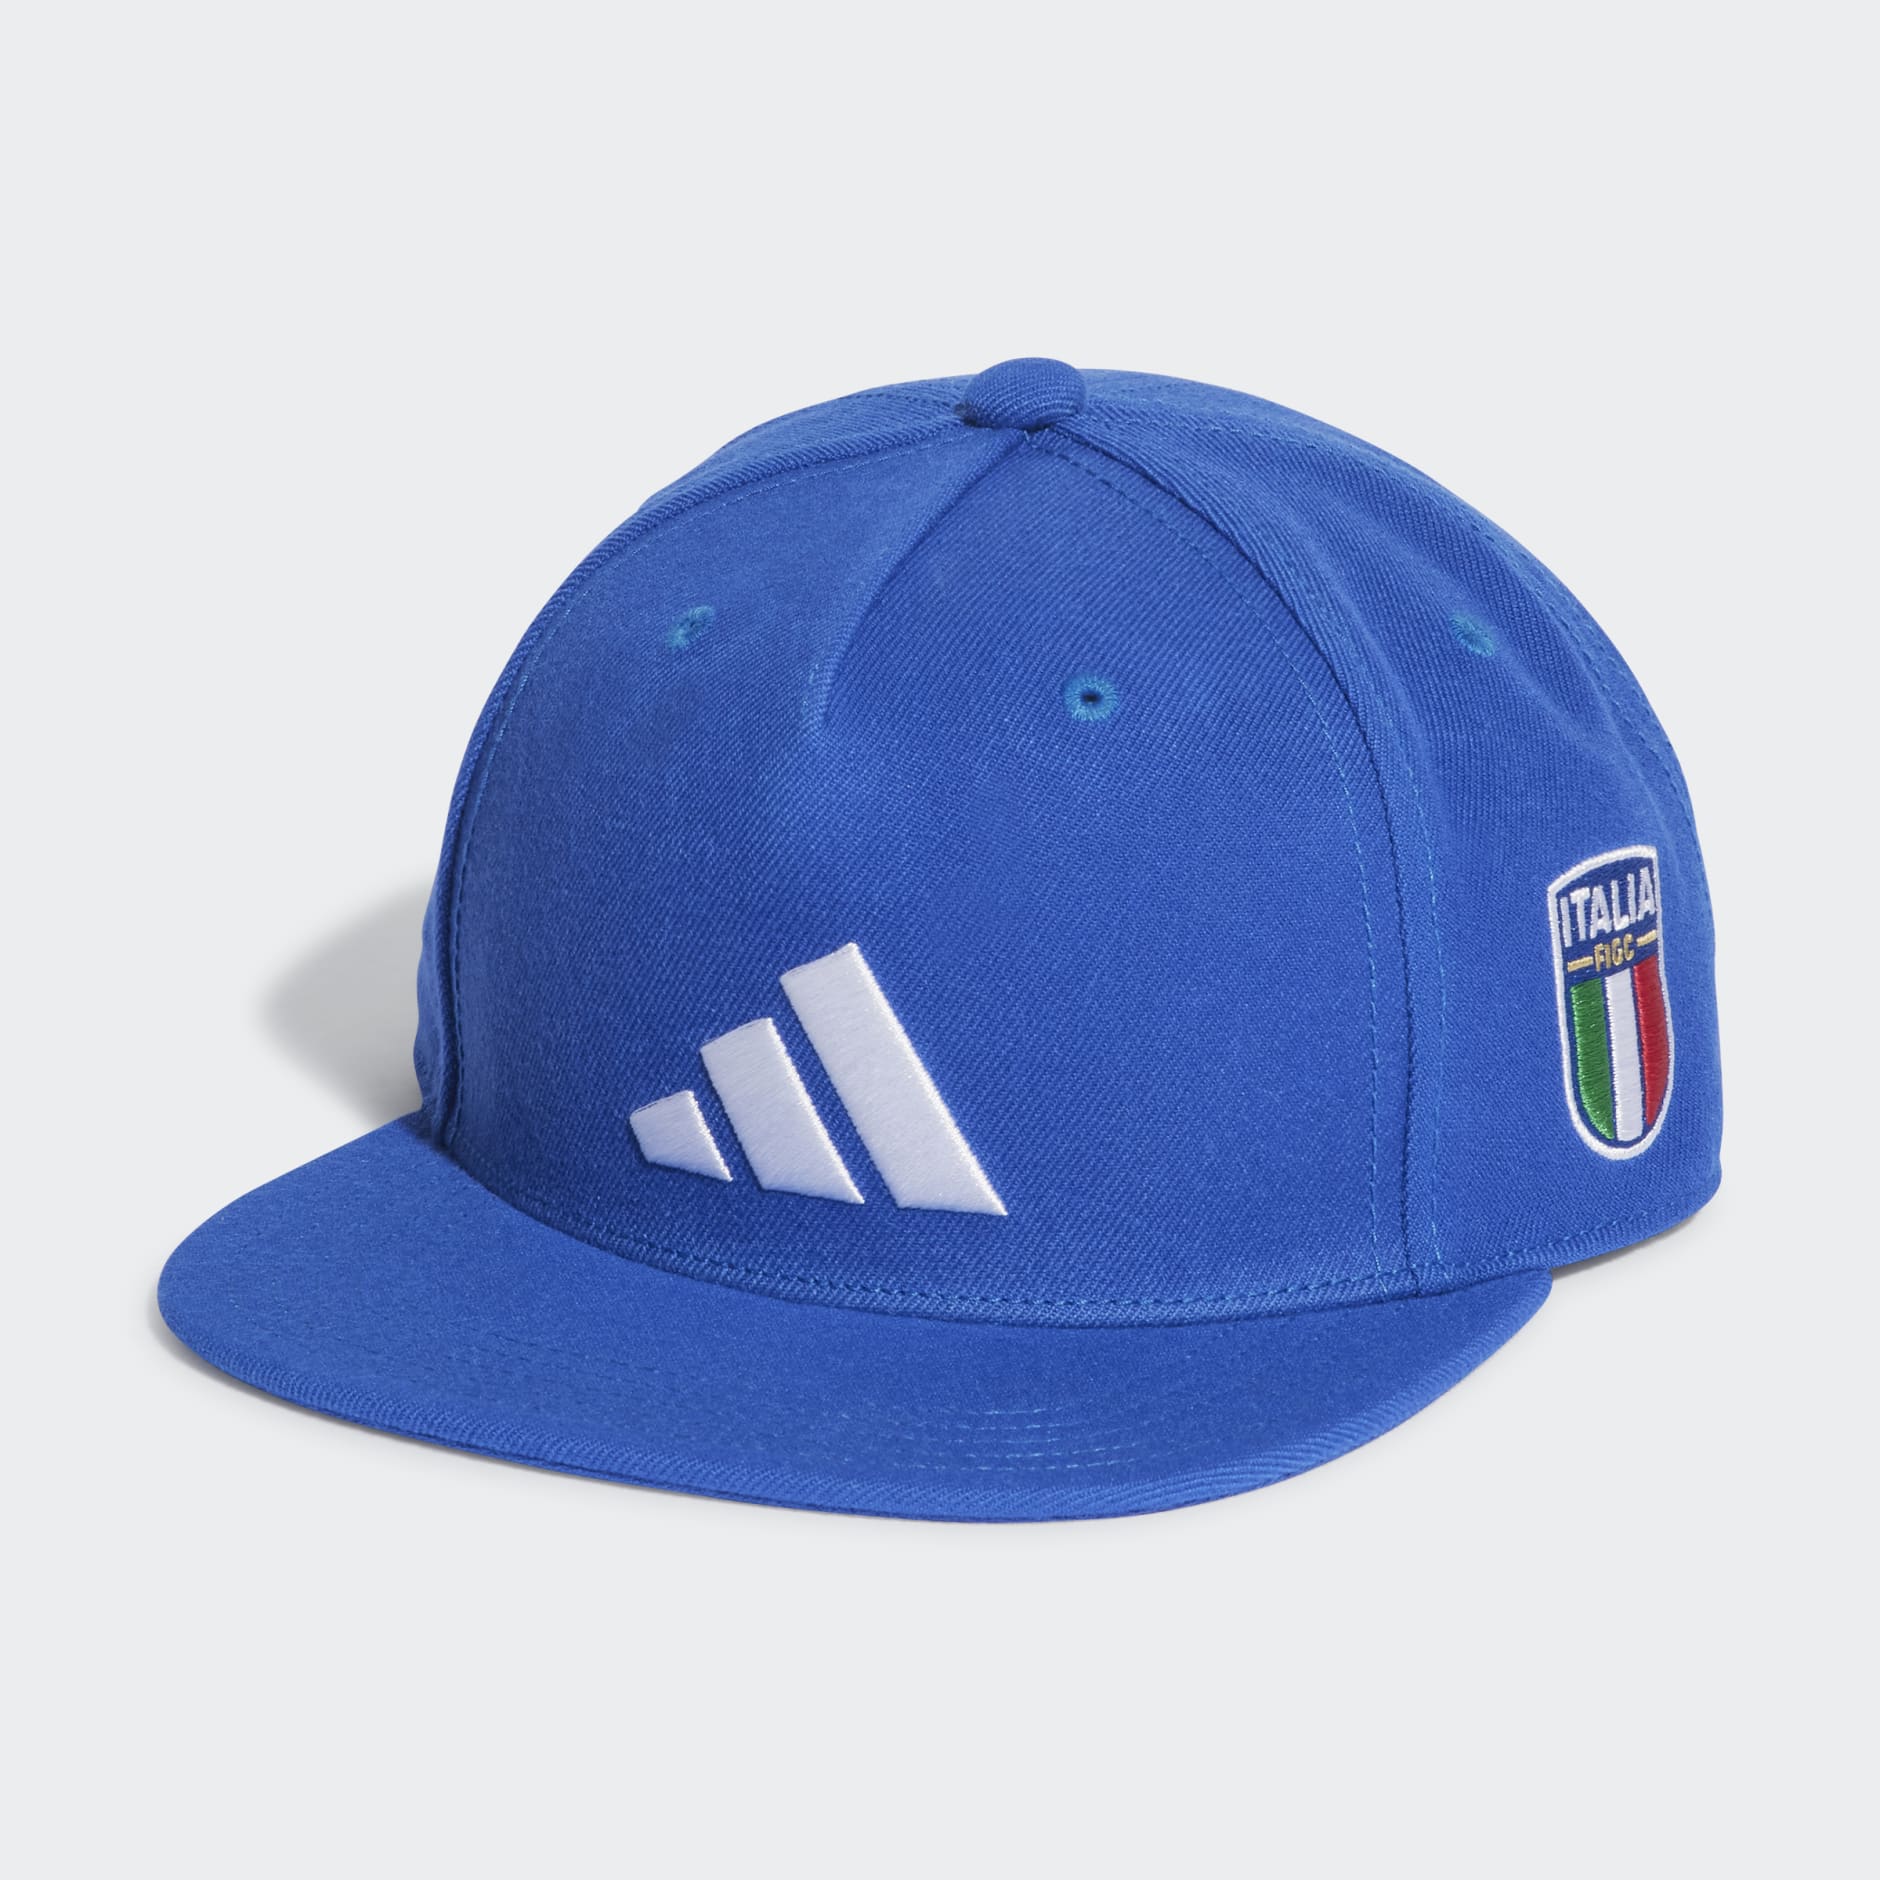 Accessories - Italian adidas - Snapback Blue | Cap Football Oman